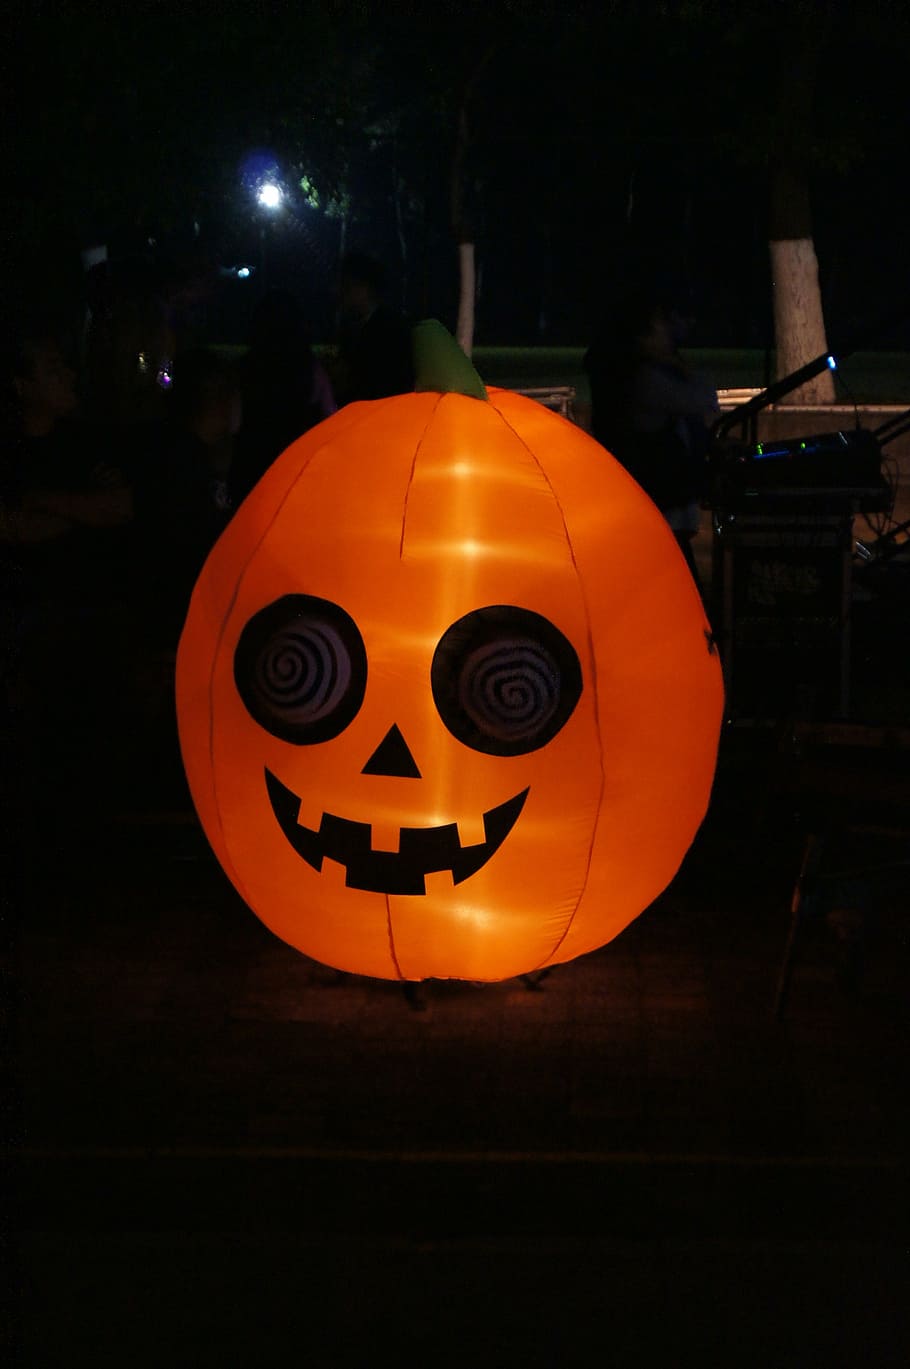 day of the dead, orange, mexico, inflatable, halloween, pumpkin, night, jack o' lantern, dark, anthropomorphic face